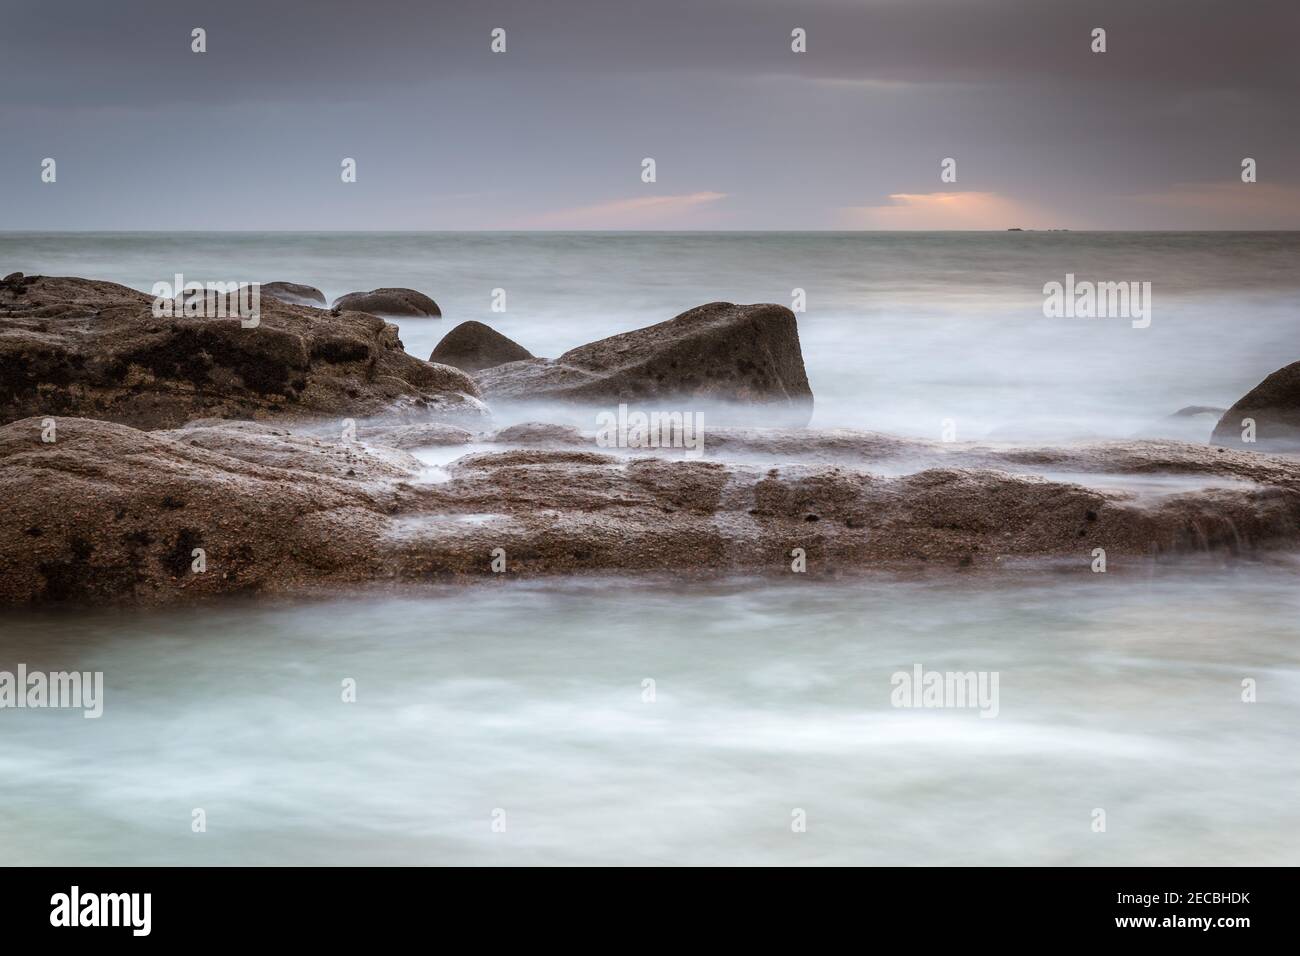 Das Meer in Bewegung - Carnsore Point Wexford Irland Stockfoto